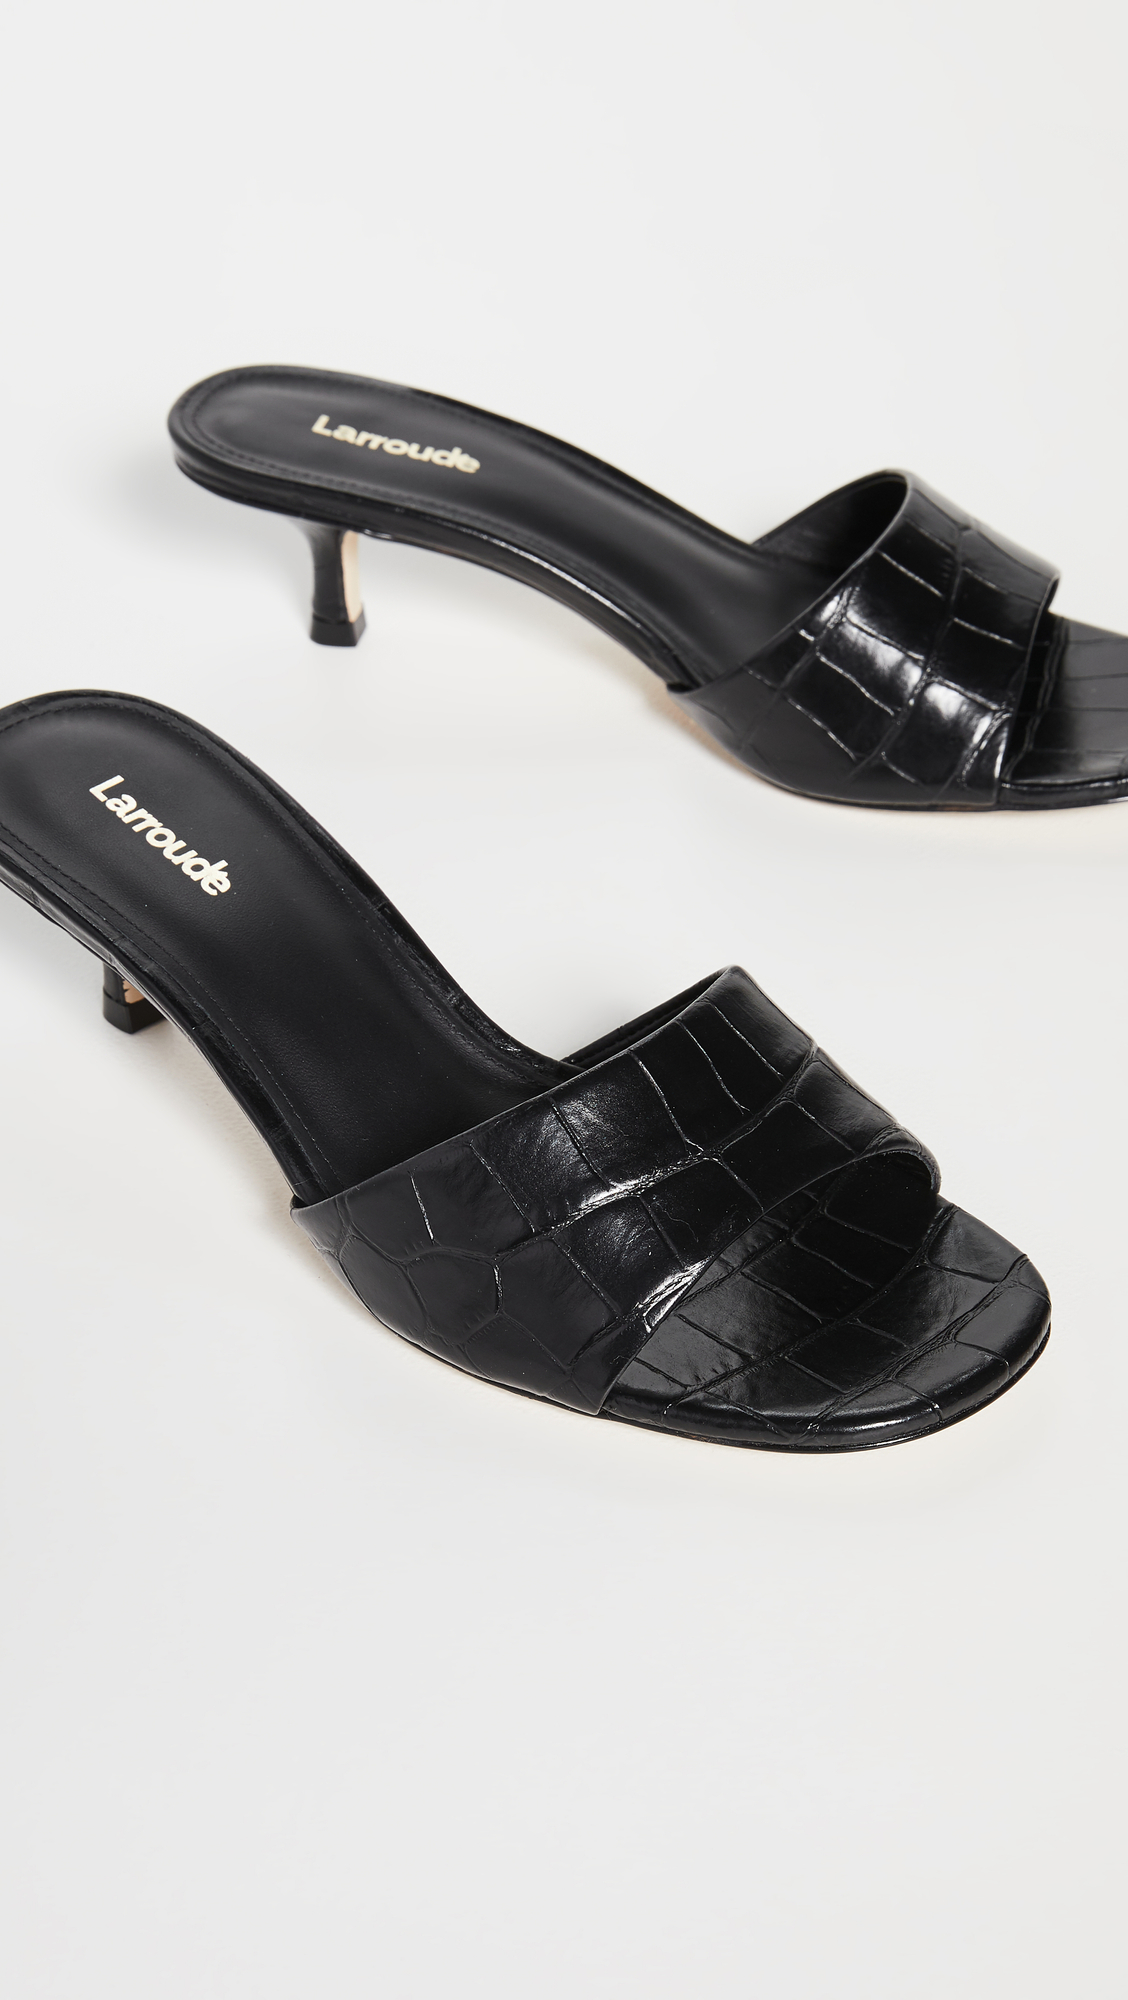 nine west open toe 2 inch high heels buckle ankle strap faux suede | eBay-donghotantheky.vn